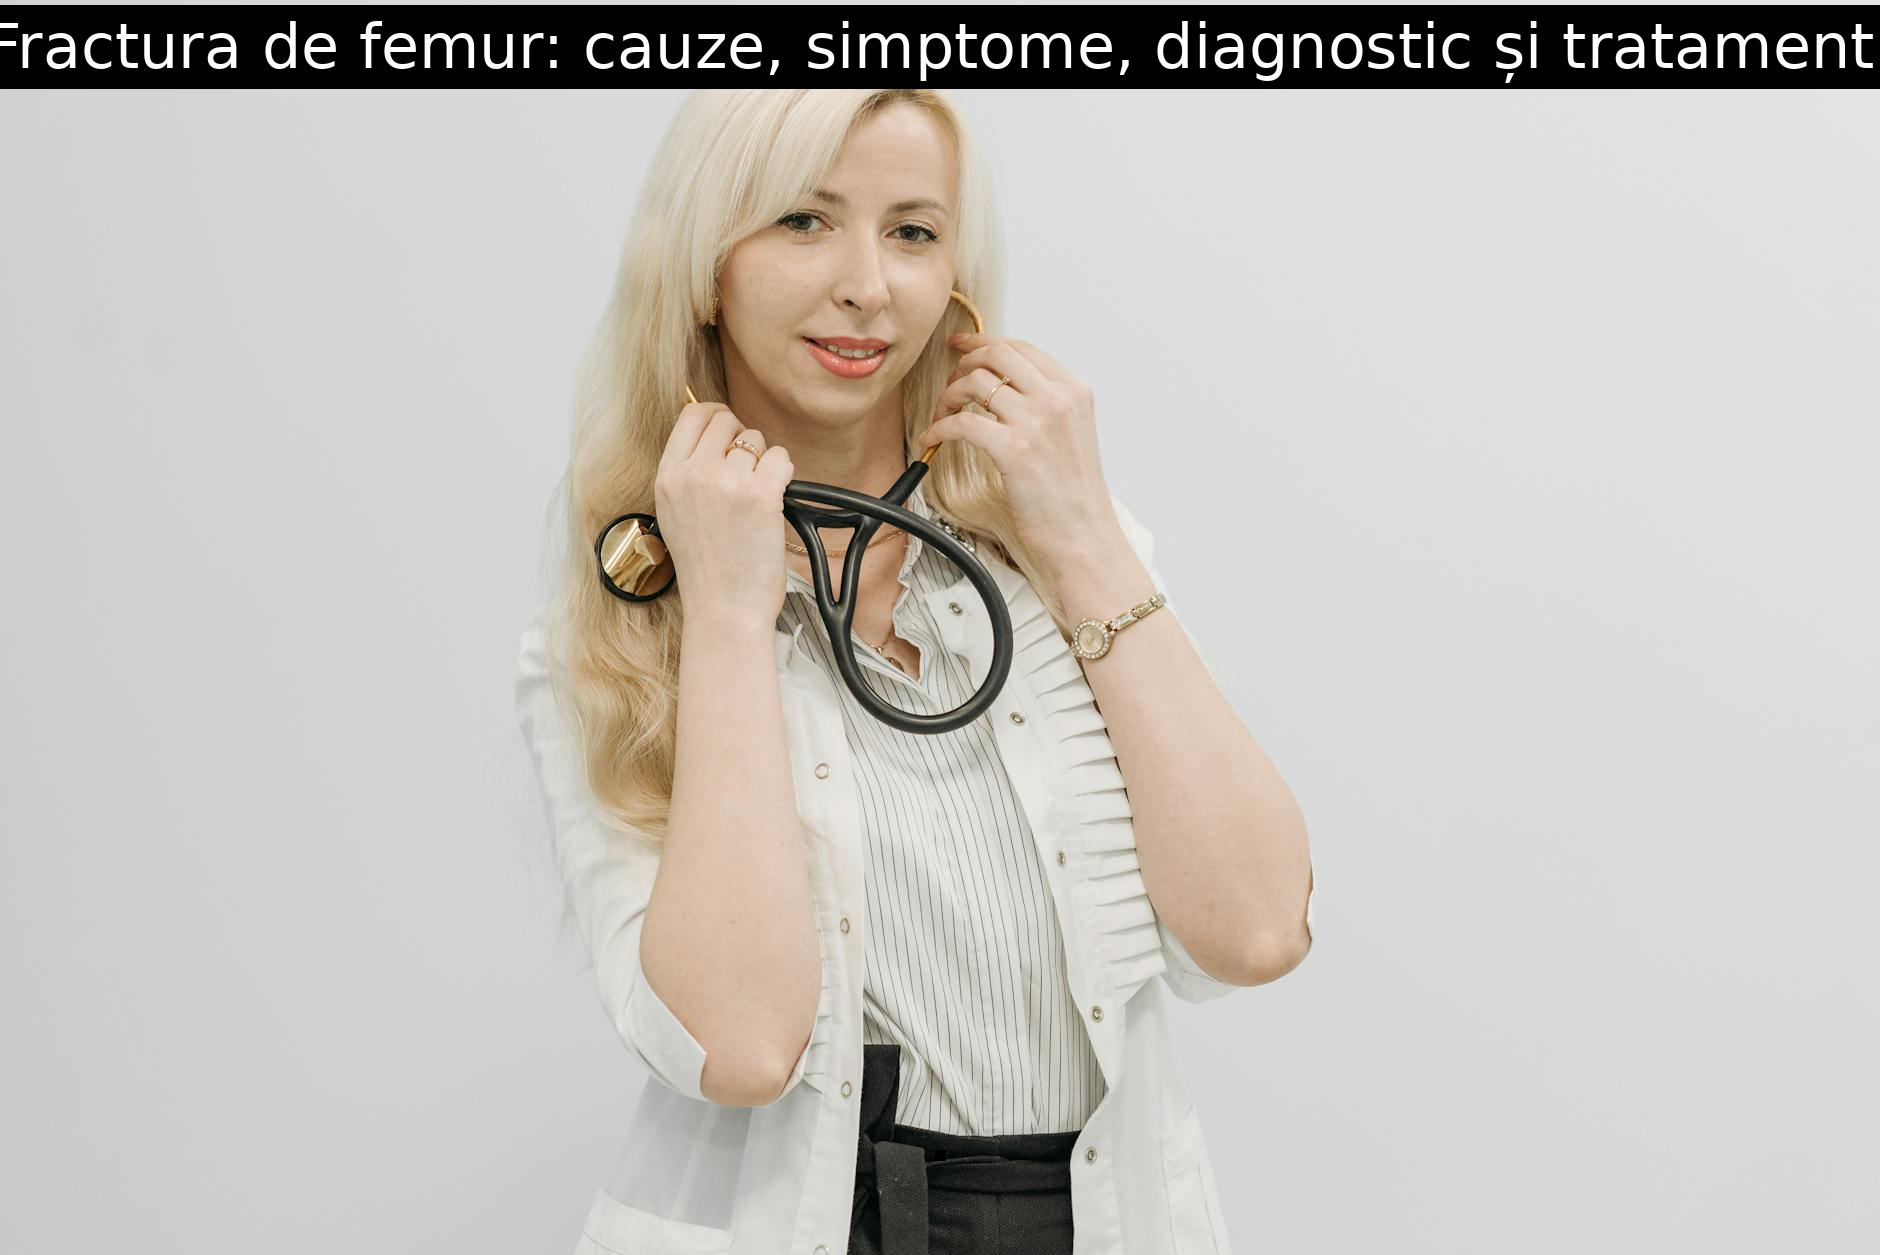 Fractura de femur: cauze, simptome, diagnostic și tratament.